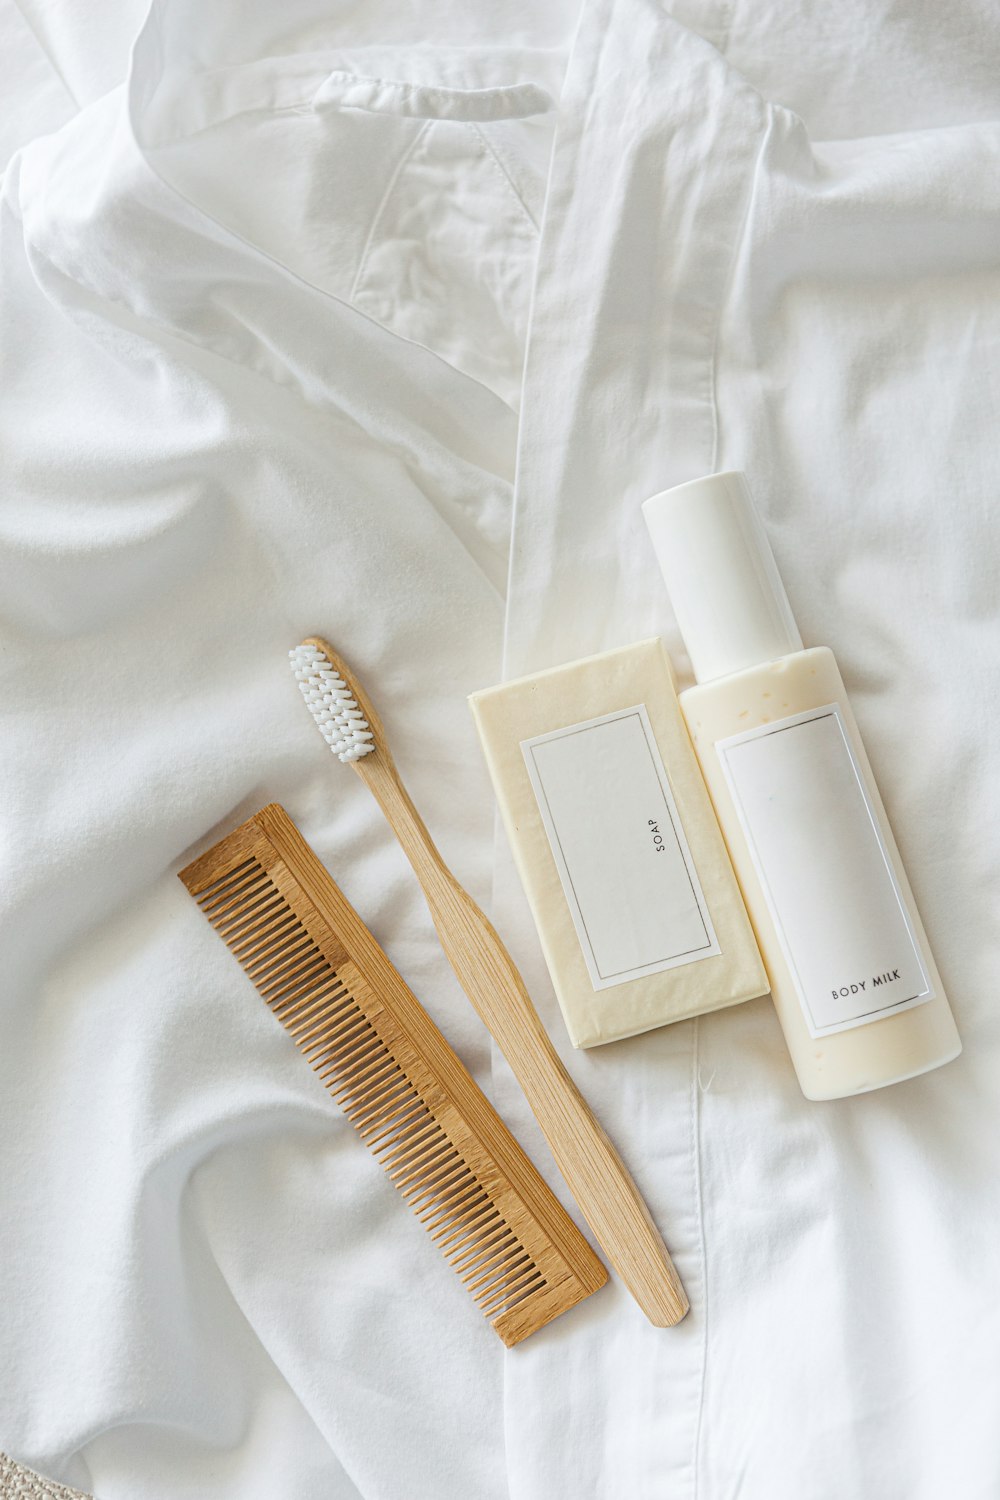 white and brown hair brush on white textile